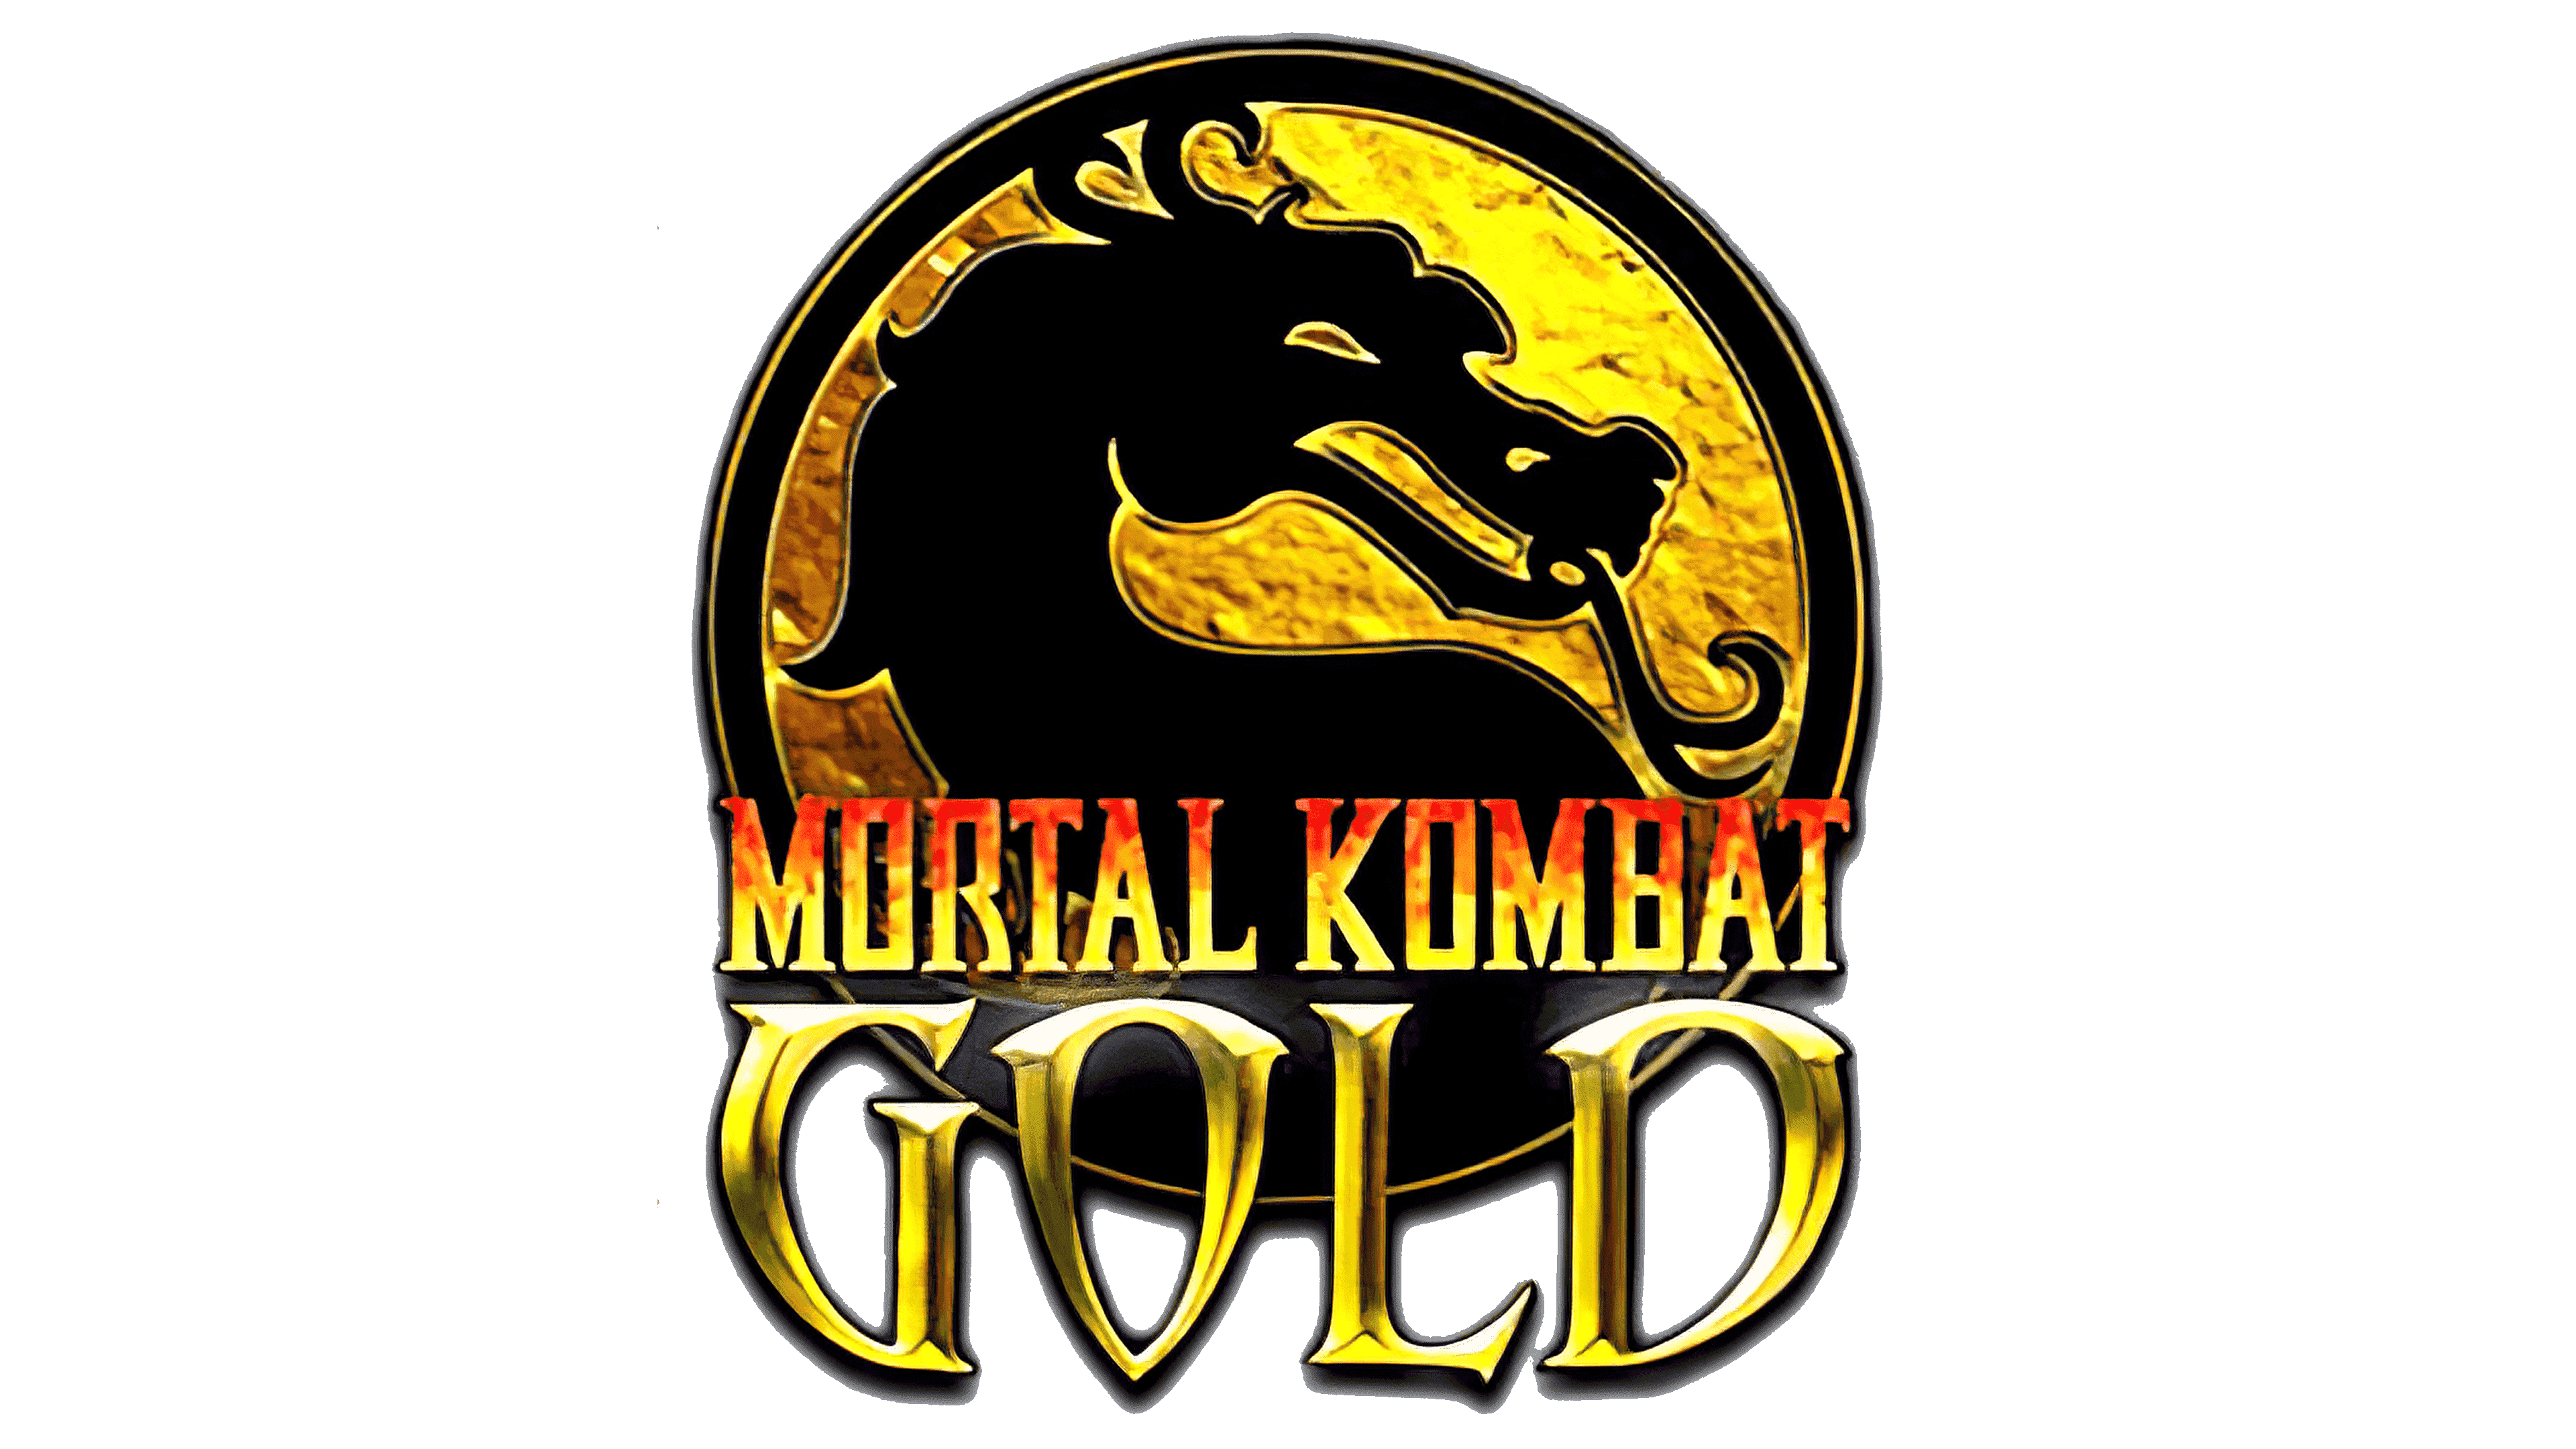 Души и монет мортал комбат. Мортал комбат 4 Голд. MK Gold Dreamcast. Mortal Kombat Gold. Mortal Kombat Gold (1999).